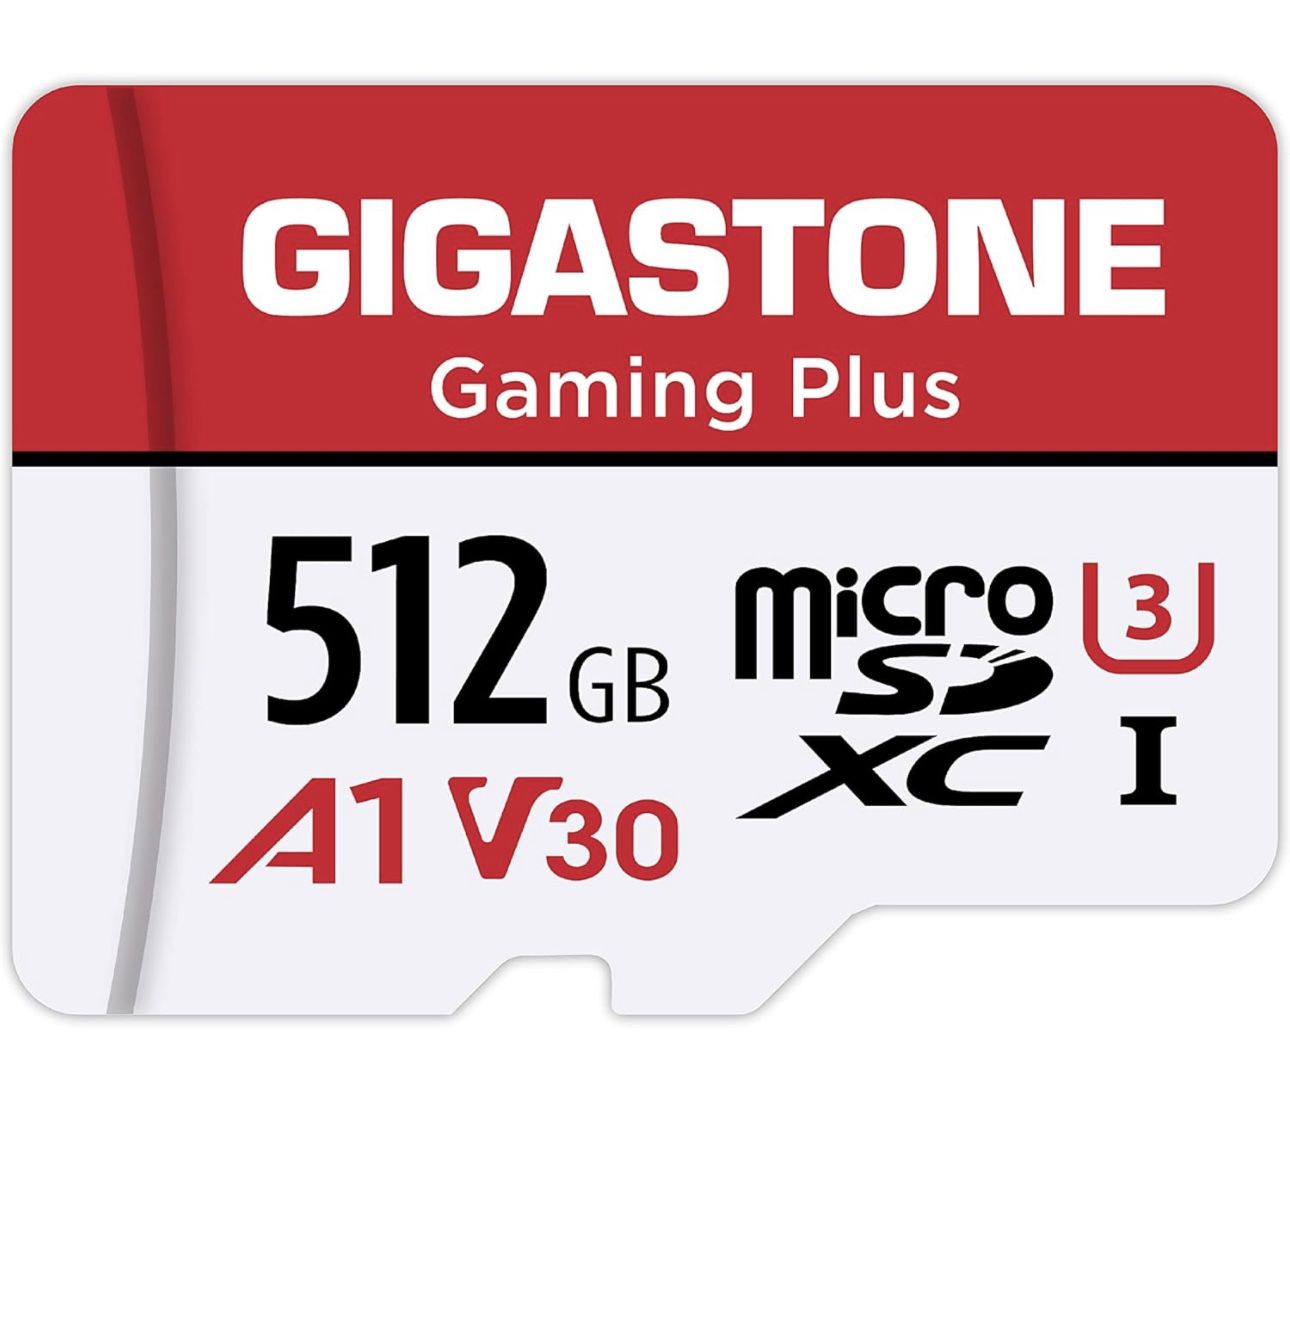 Gigastone] 512GB Micro SD Card, Gaming Plus, MicroSDXC Memory Card for Nintendo-Switch, Wyze, GoPro, Dash Cam, Security Camera, 4K Video Recording, UH